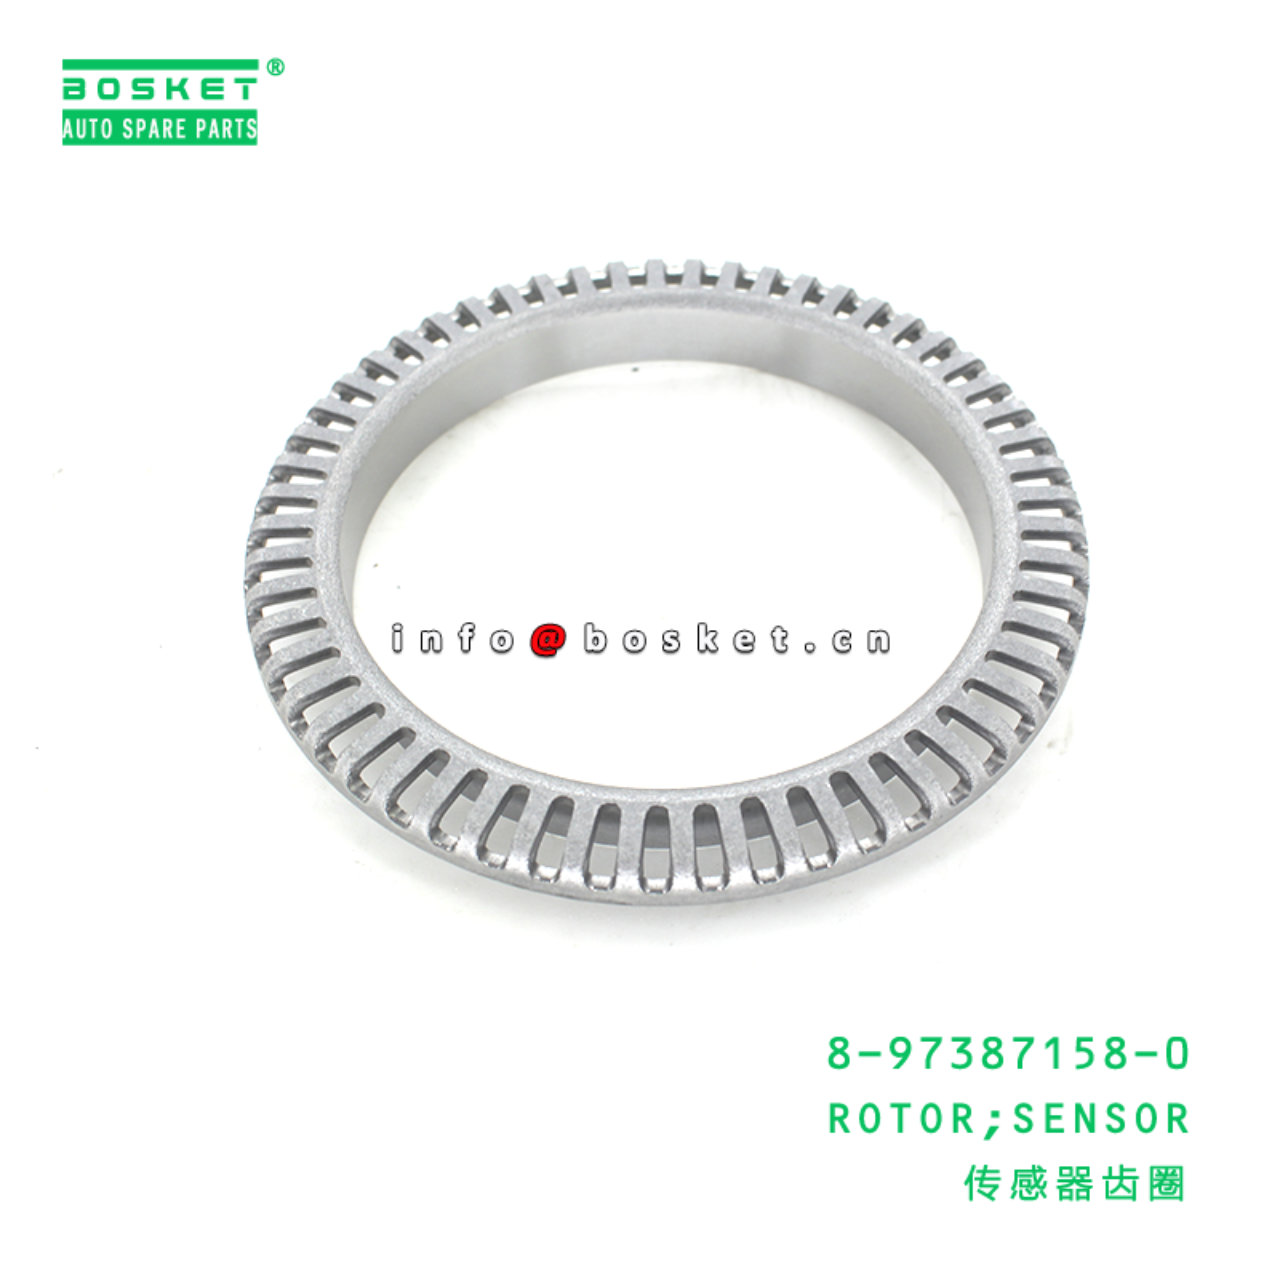  8-97387158-0 Sensor Rotor 8973871580 Suitable for ISUZU NMR